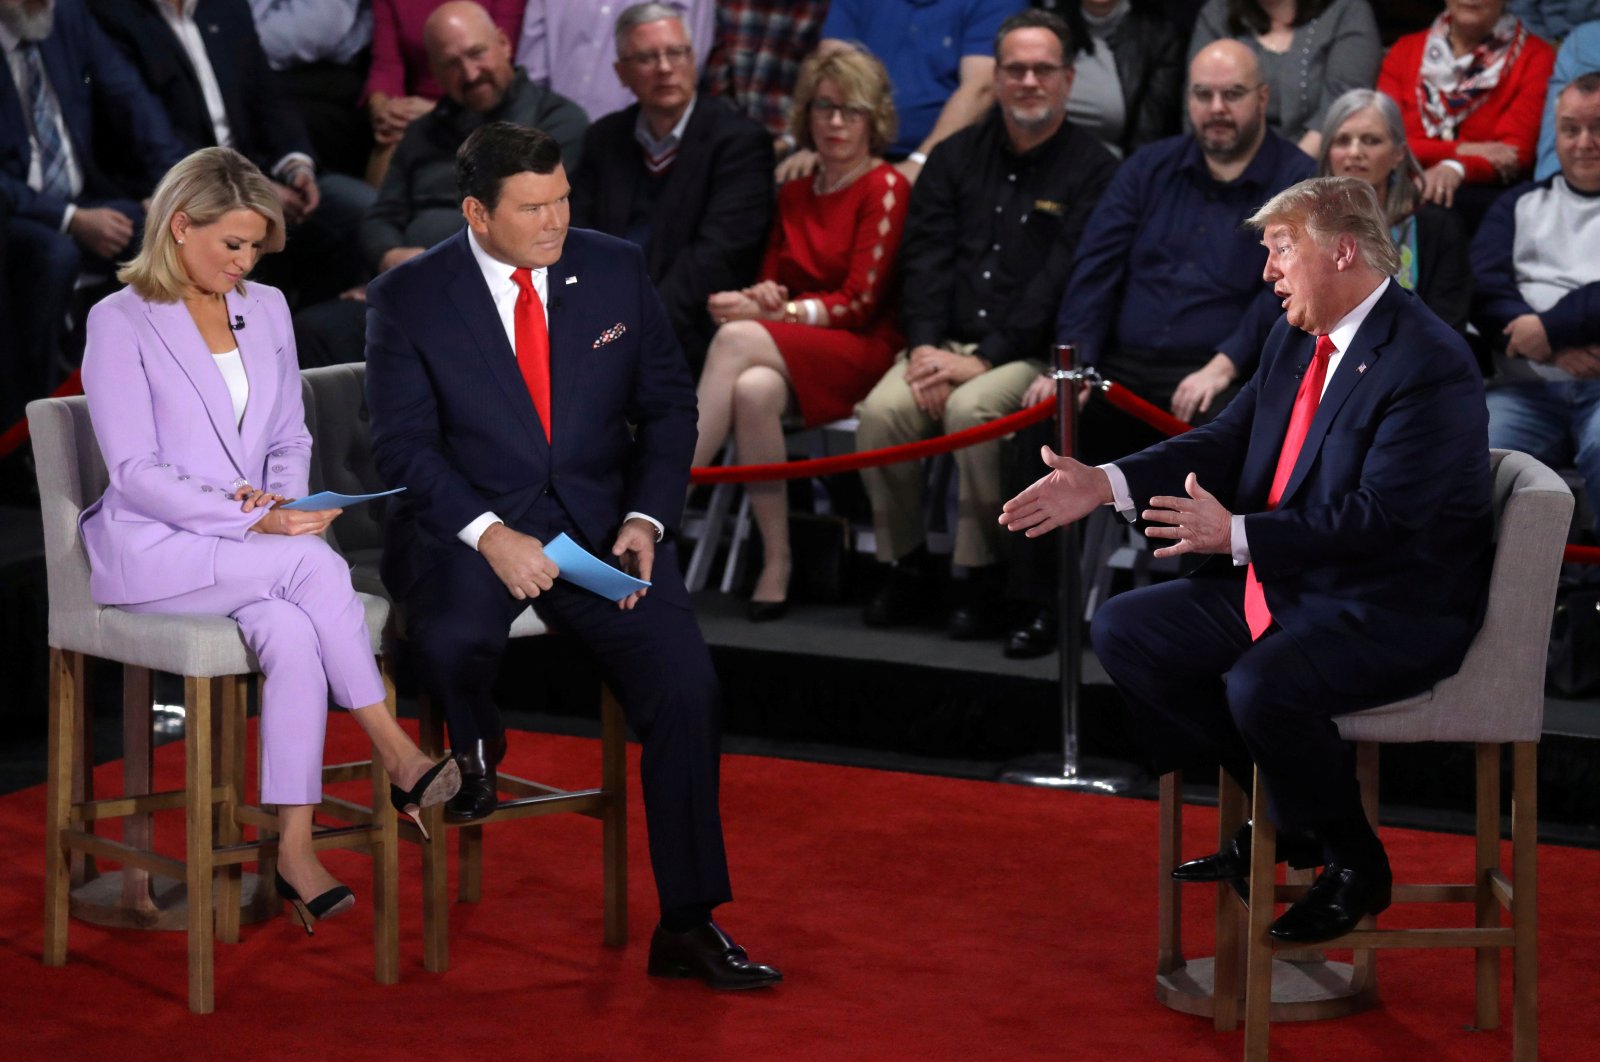 The U.S. President Donald Trump talks at a Fox News Town Hall event with moderators Bret Baier and Martha MacCallum, Scranton, Pennsylvania, March 5, 2020. (REUTERS Photo)